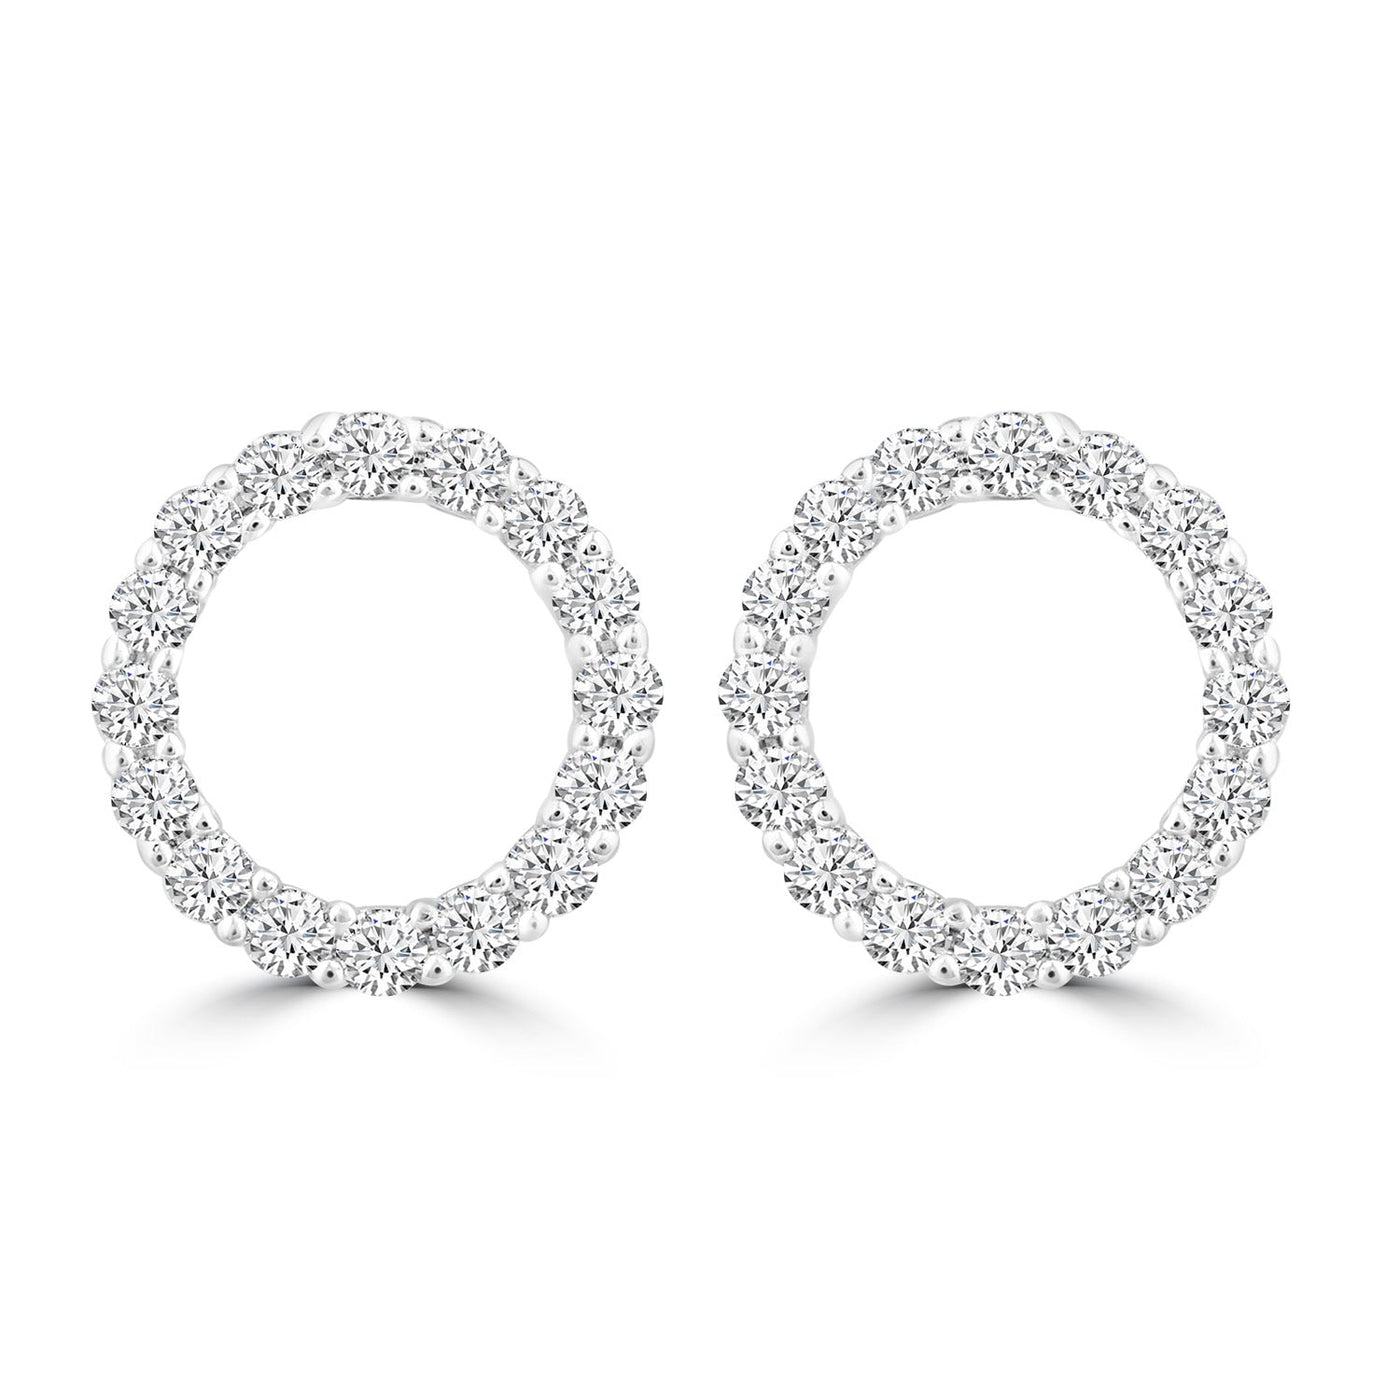 Diamond Fashion Earrings with 0.20ct Diamonds in 9K White Gold - EF-5954-W